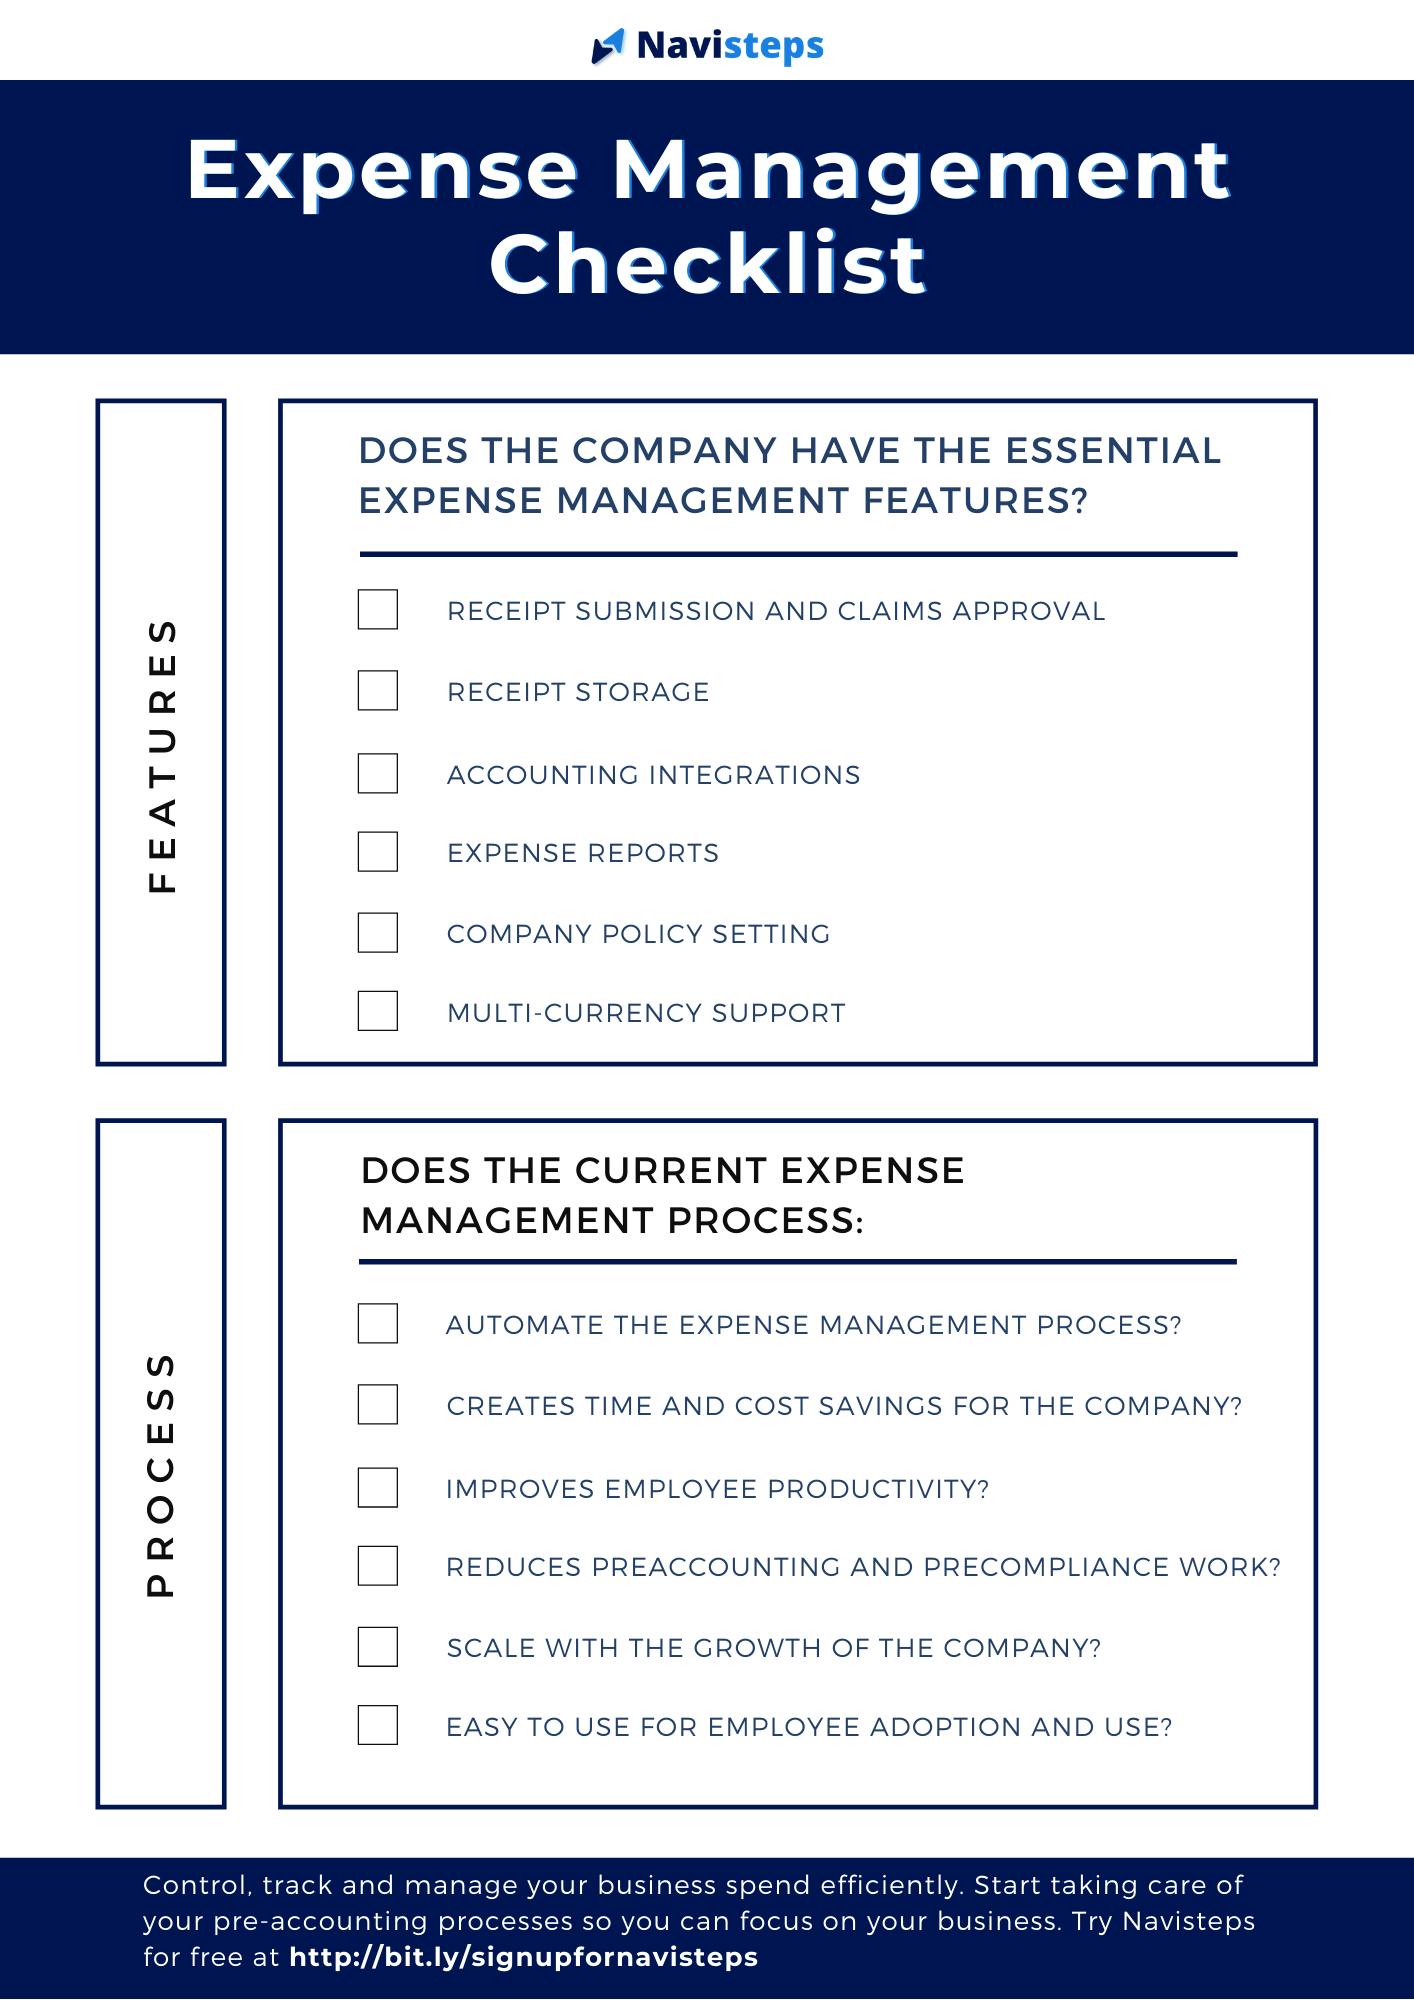 Expense Management Checklist for Businesses